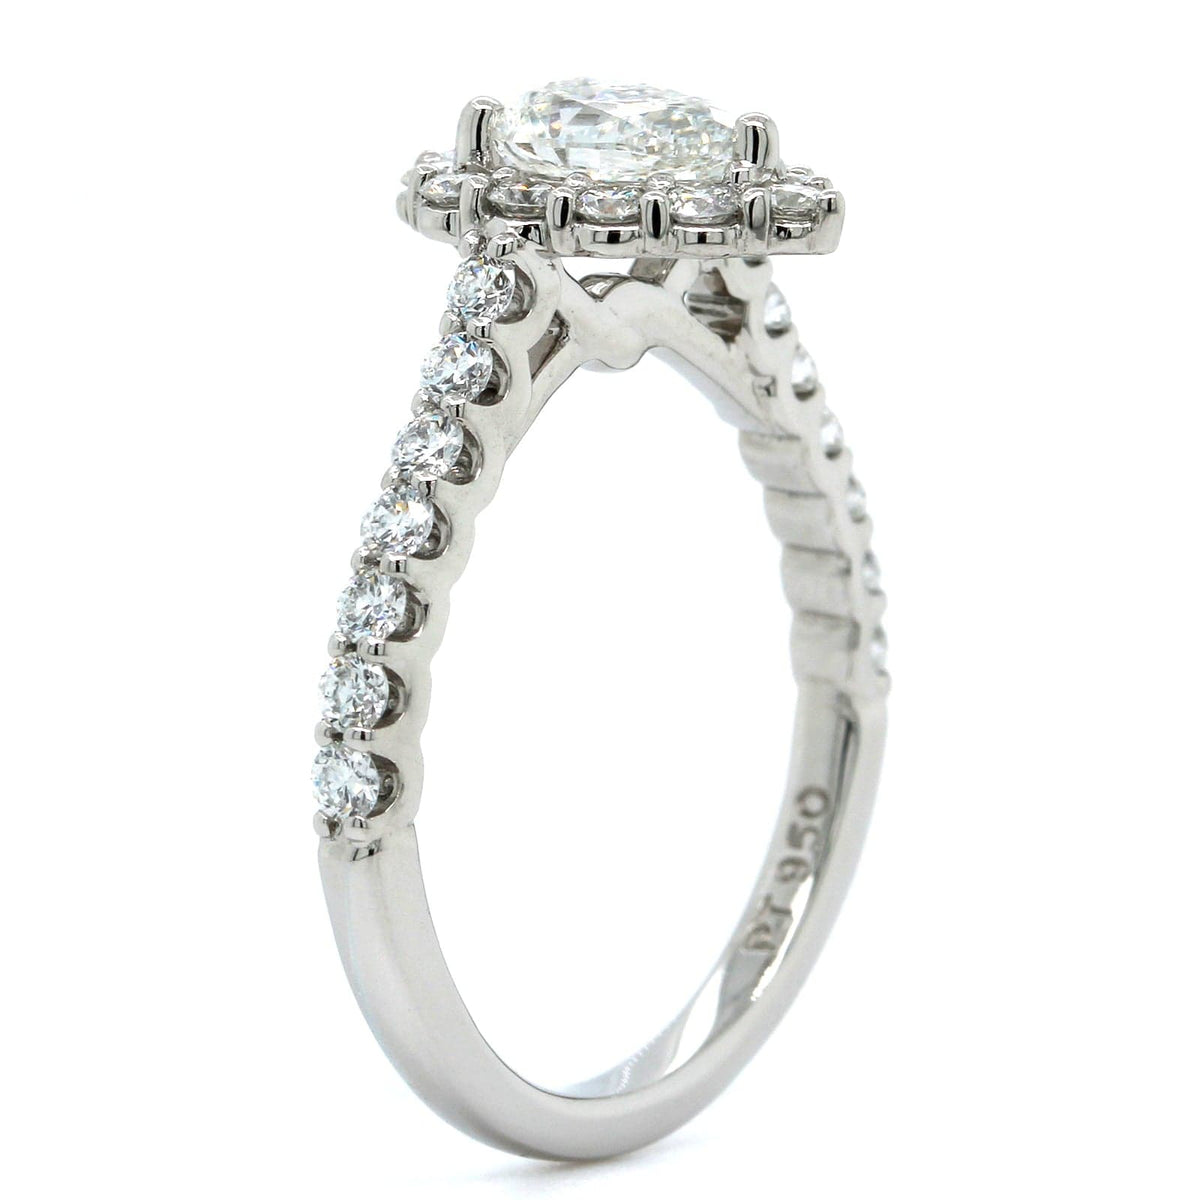 Platinum Pear Shape Diamond Halo Engagement Ring